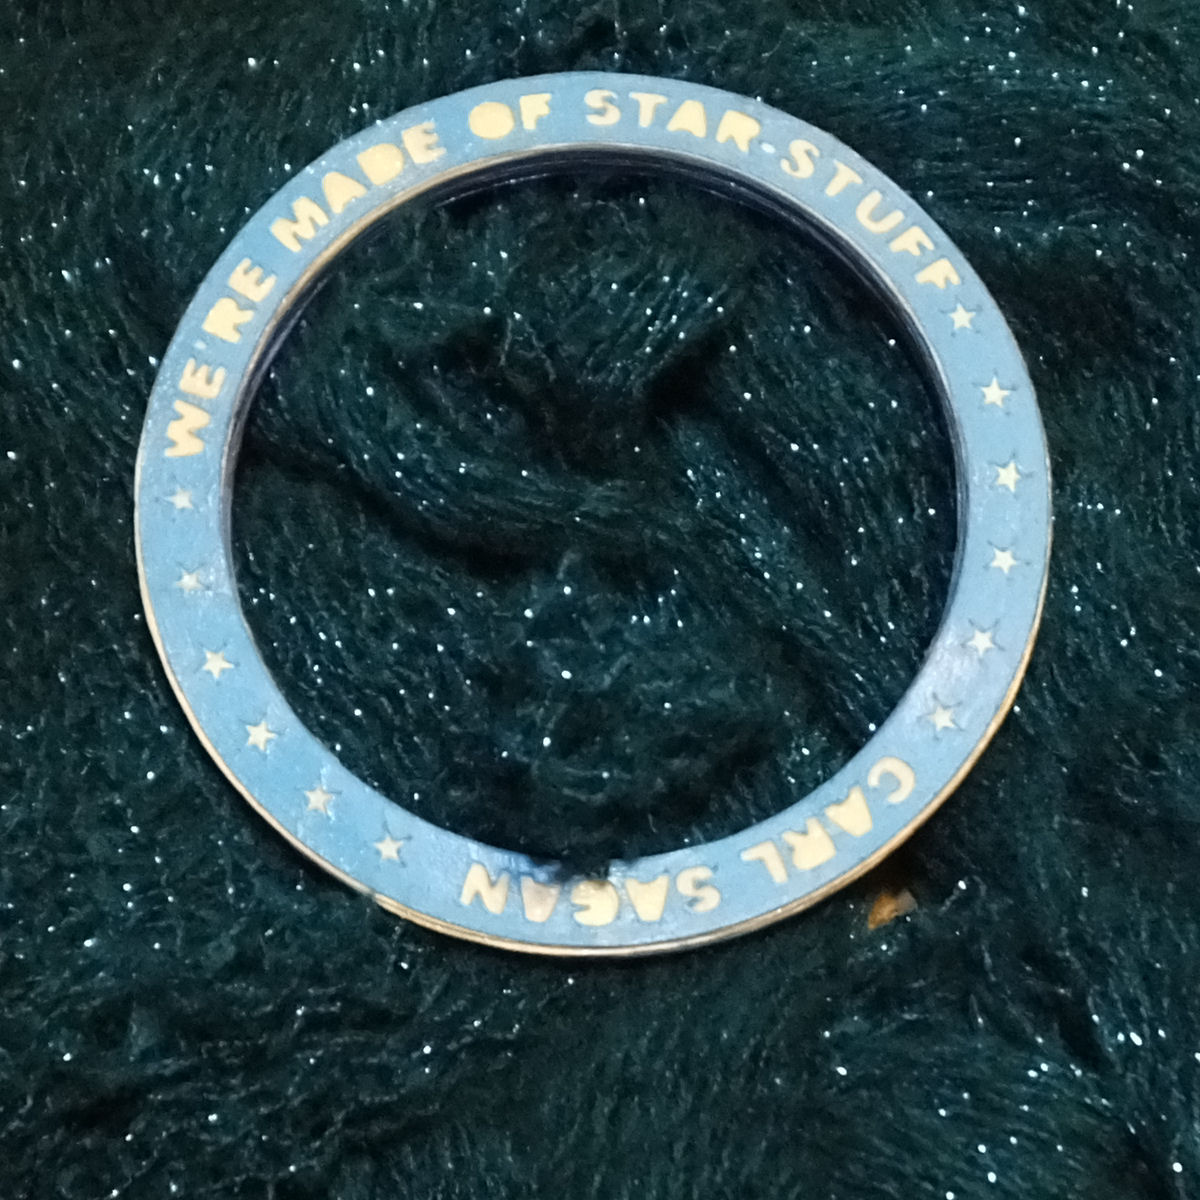 We're made of star-stuff bangle bracelet made using Cricut Explore #Cricut #papercrafts #jewelryproject